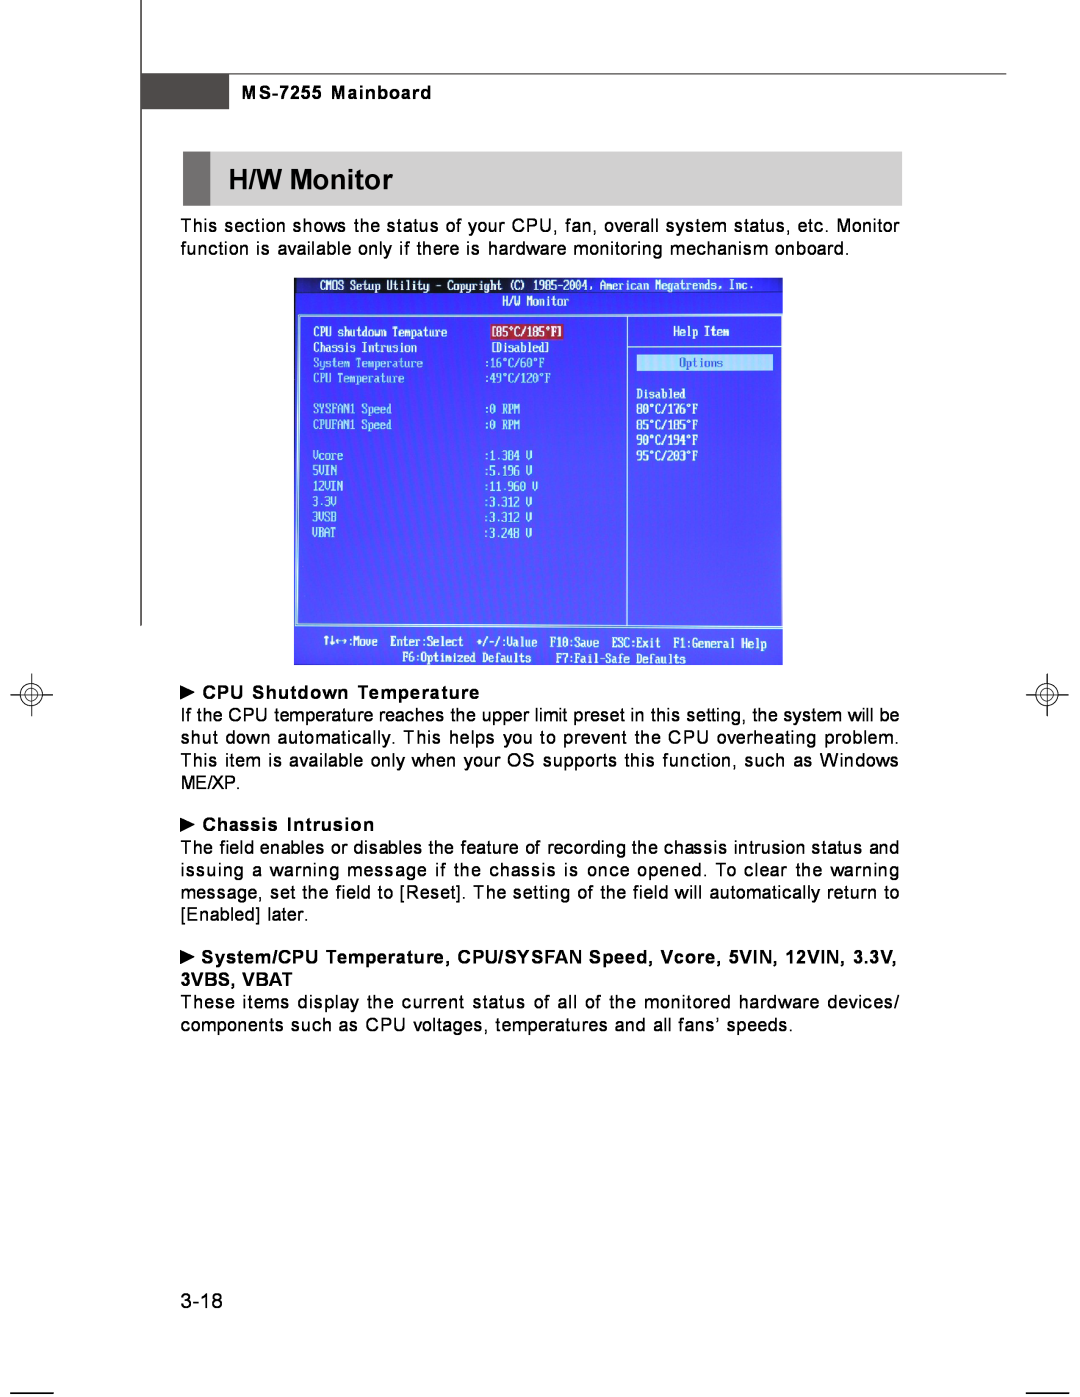 MSI manual H/W Monitor, 3-18, CPU Shutdown Temperature, Chassis Intrusion, MS-7255 Mainboard 